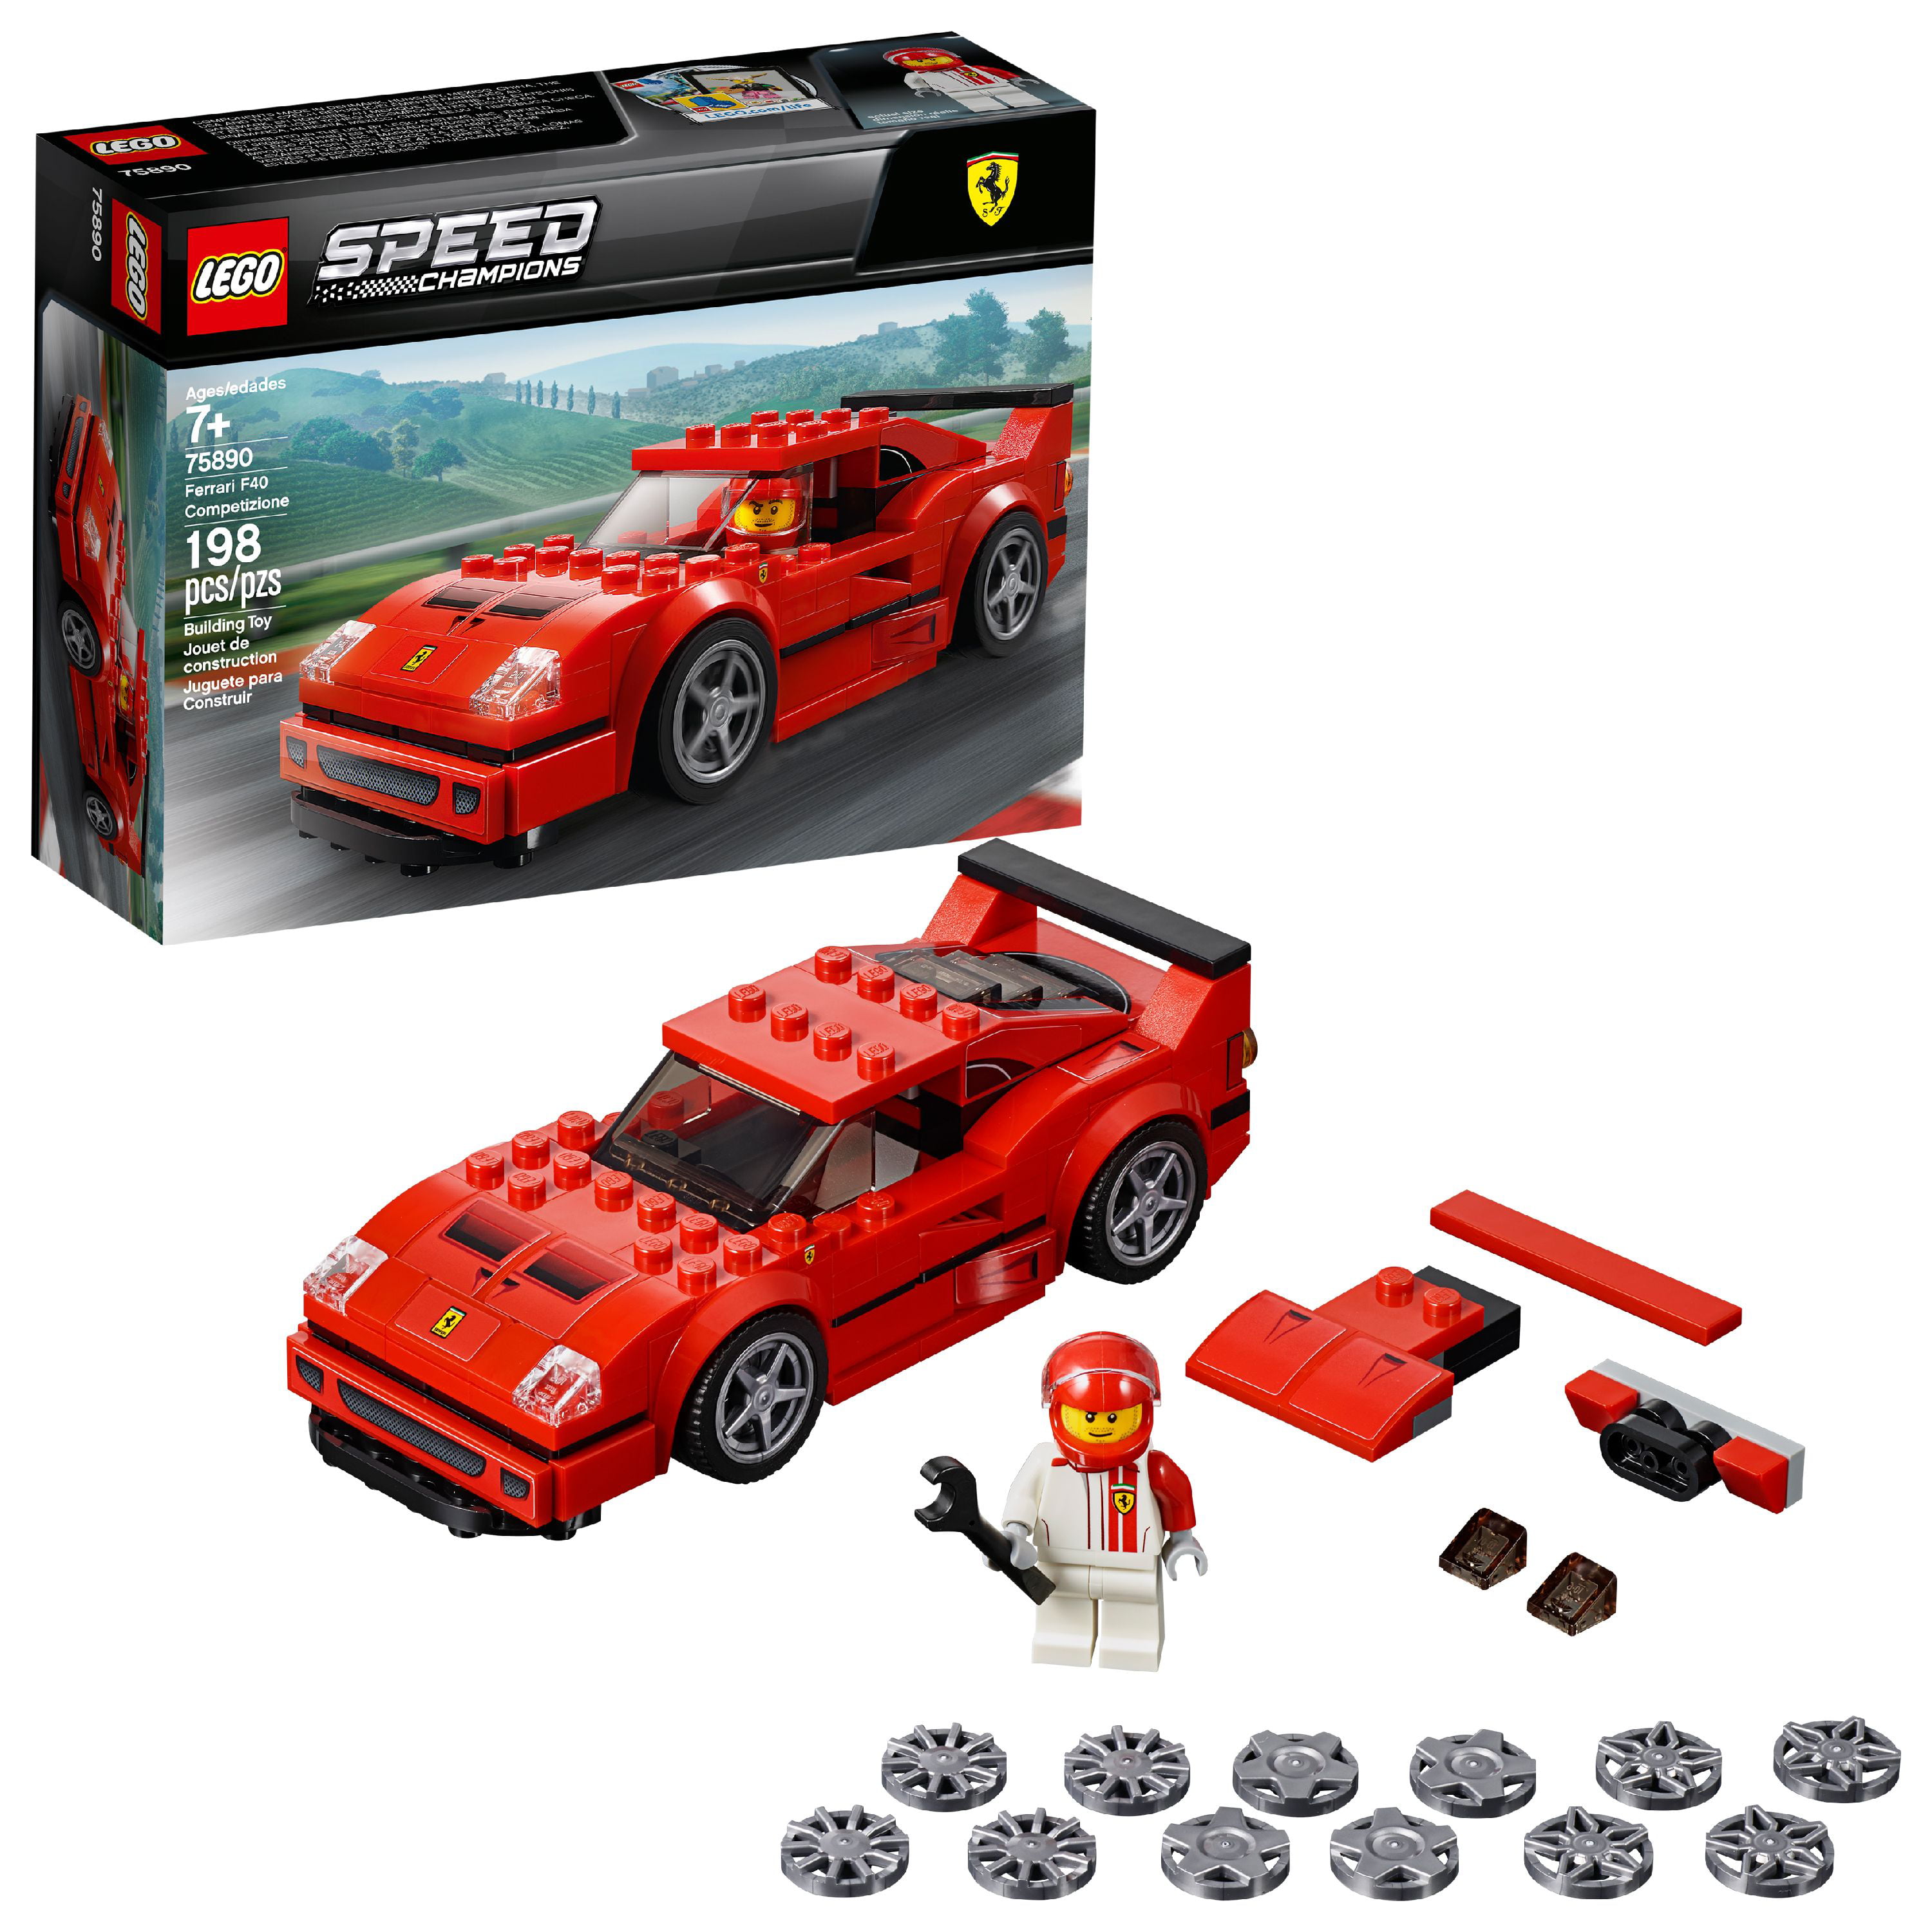 Motley slap Oral LEGO Speed Champions 1985 Audi Sport quattro S1 76897 Toy Car Building Kit  (250 Pieces) - Walmart.com